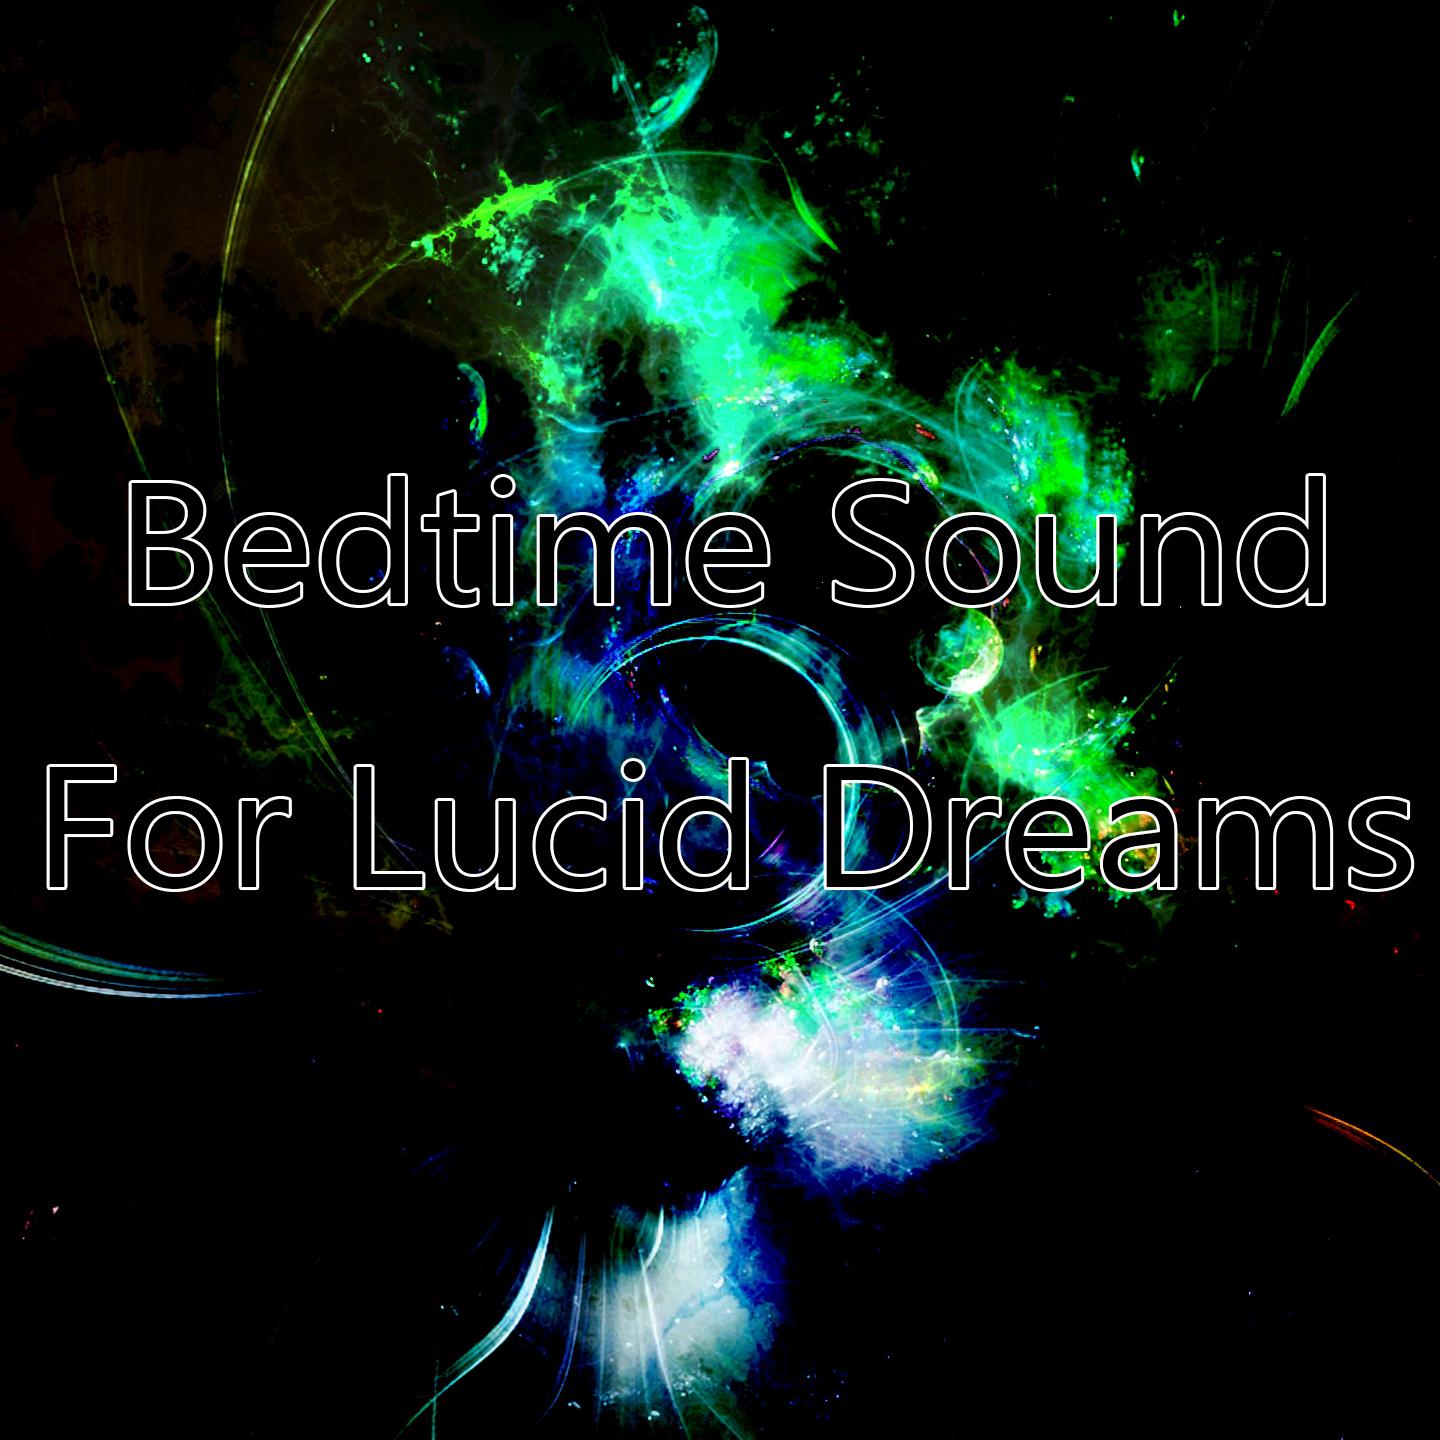 Bedtime Sound For Lucid Dreams